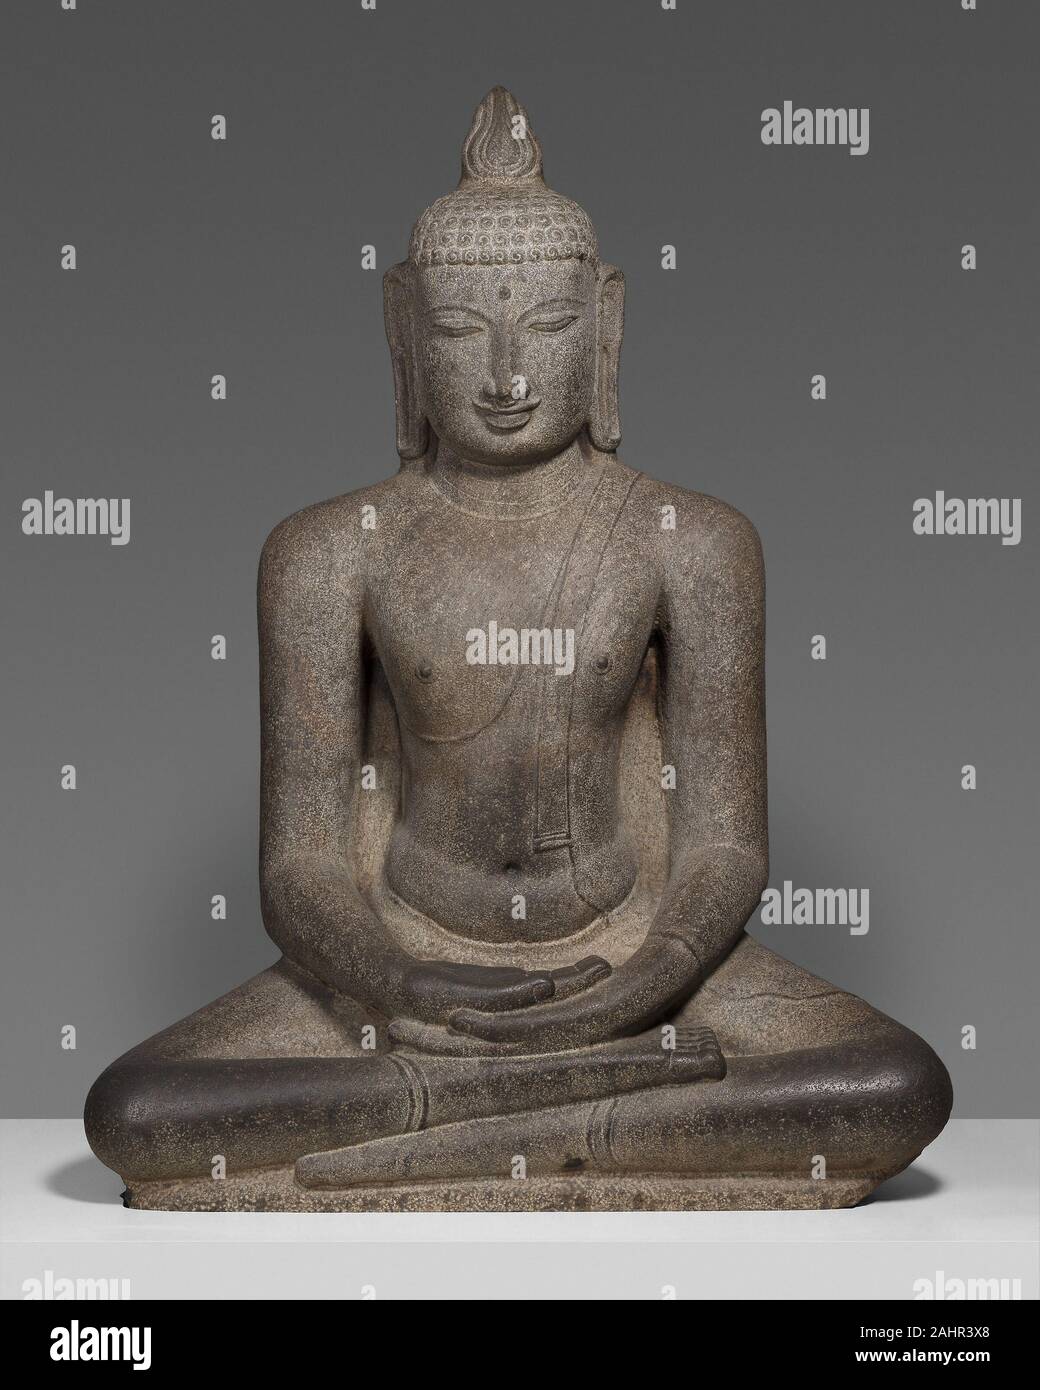 Big Meditating Buddha Statue w/ Begging Bowl For Home